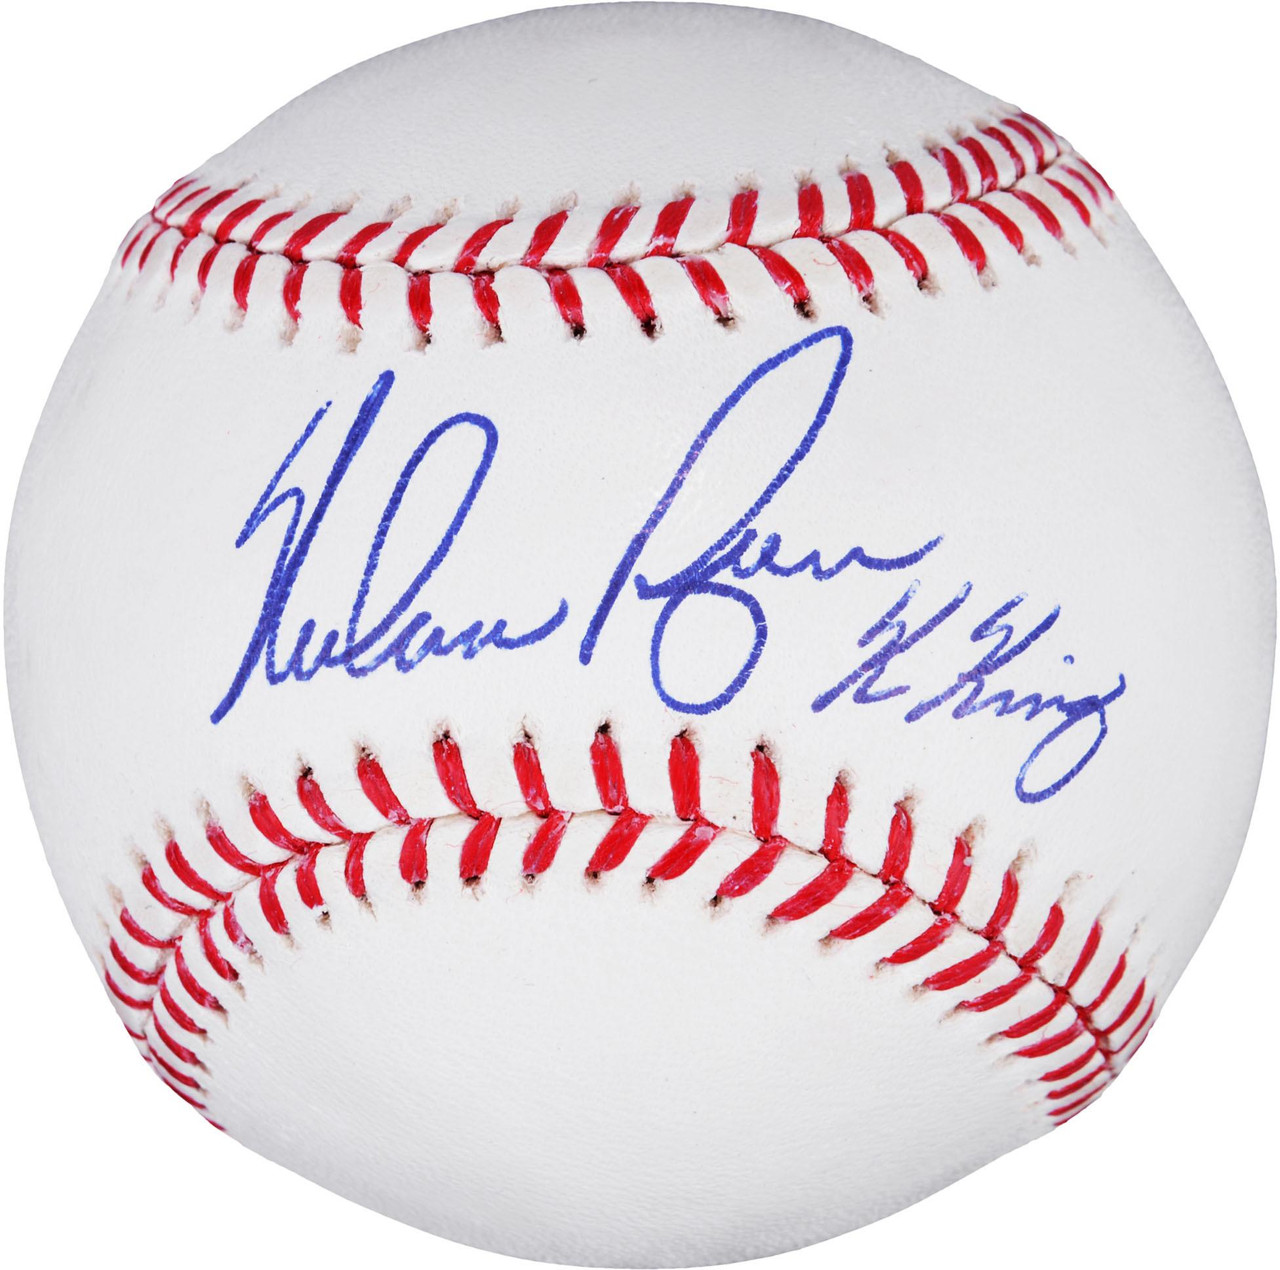 Fanatics Authentic Nolan Ryan Texas Rangers Autographed Baseball with 5714 K's Inscription